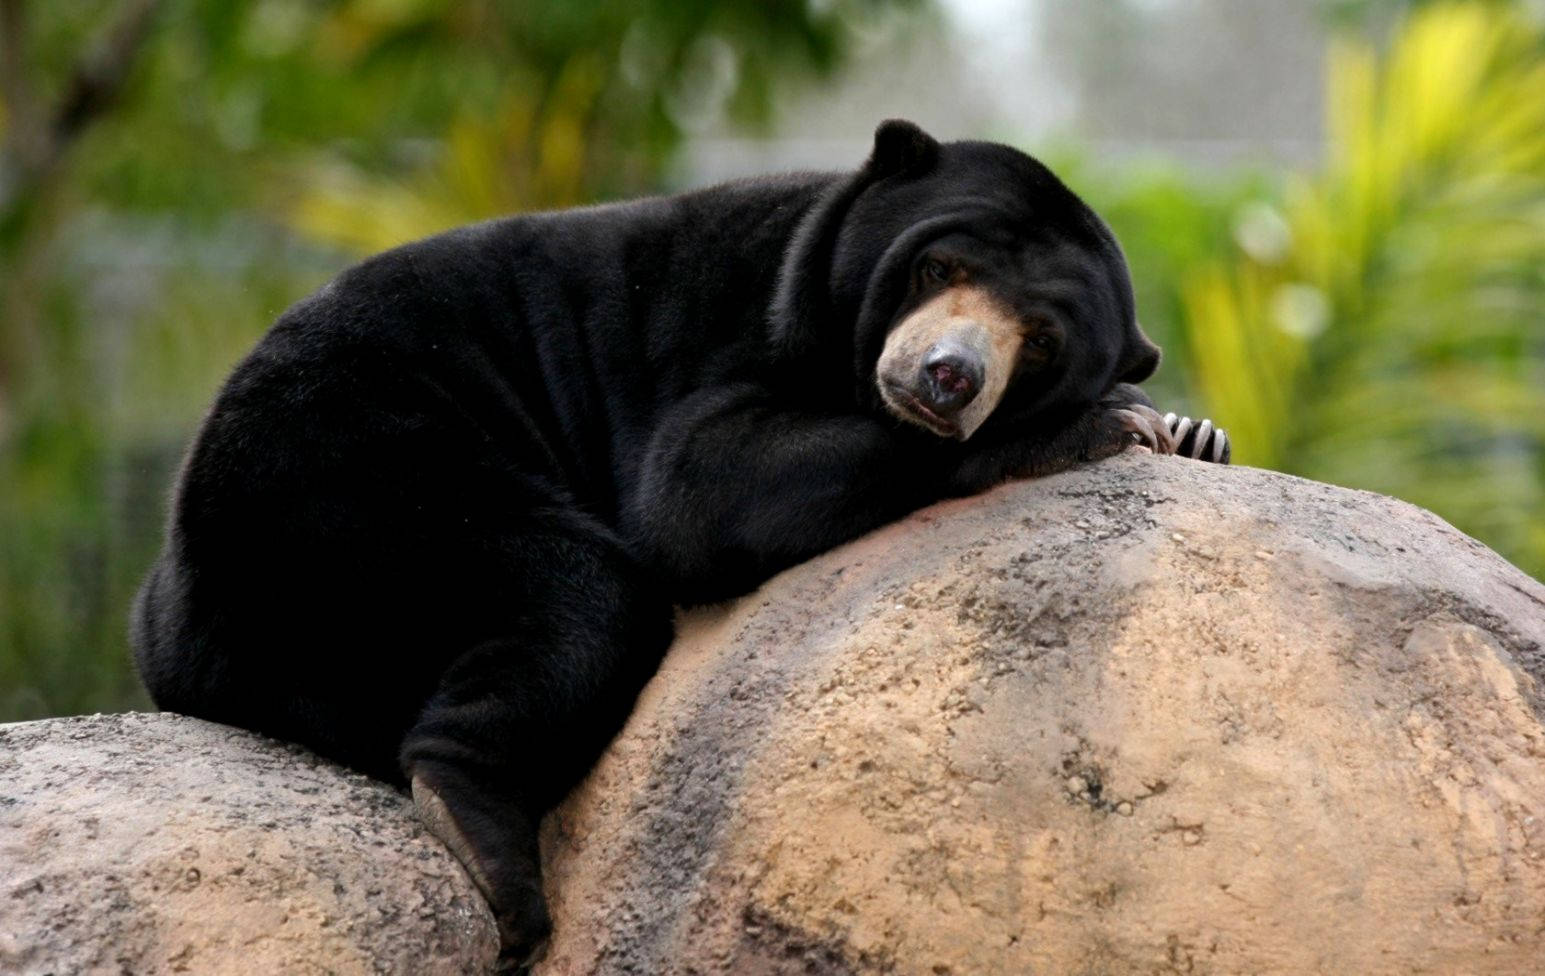 Cute Black Sleeping Bear Background